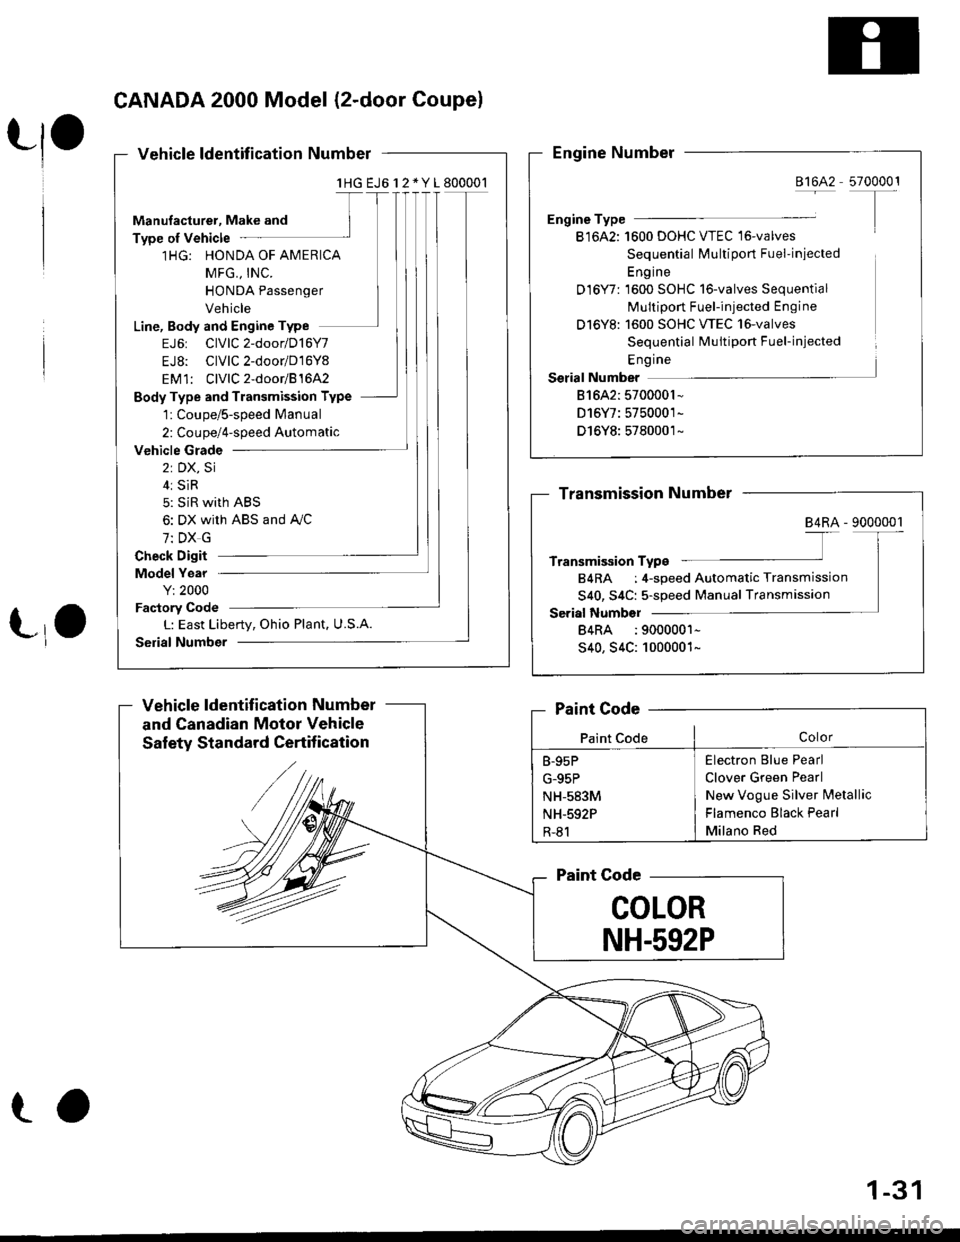 HONDA CIVIC 1997 6.G Owners Manual CANADA 2000 Model (2-door Coupel
Vehicle ldentification Number
lHG EJ6l 2 * Y 1800001
Manufacturer, Make and
Type of Vehicle
1HG: HONDA OF AMERICA
MFG,, INC.
HONDA Passenger
Vehicle
Line, Body and En